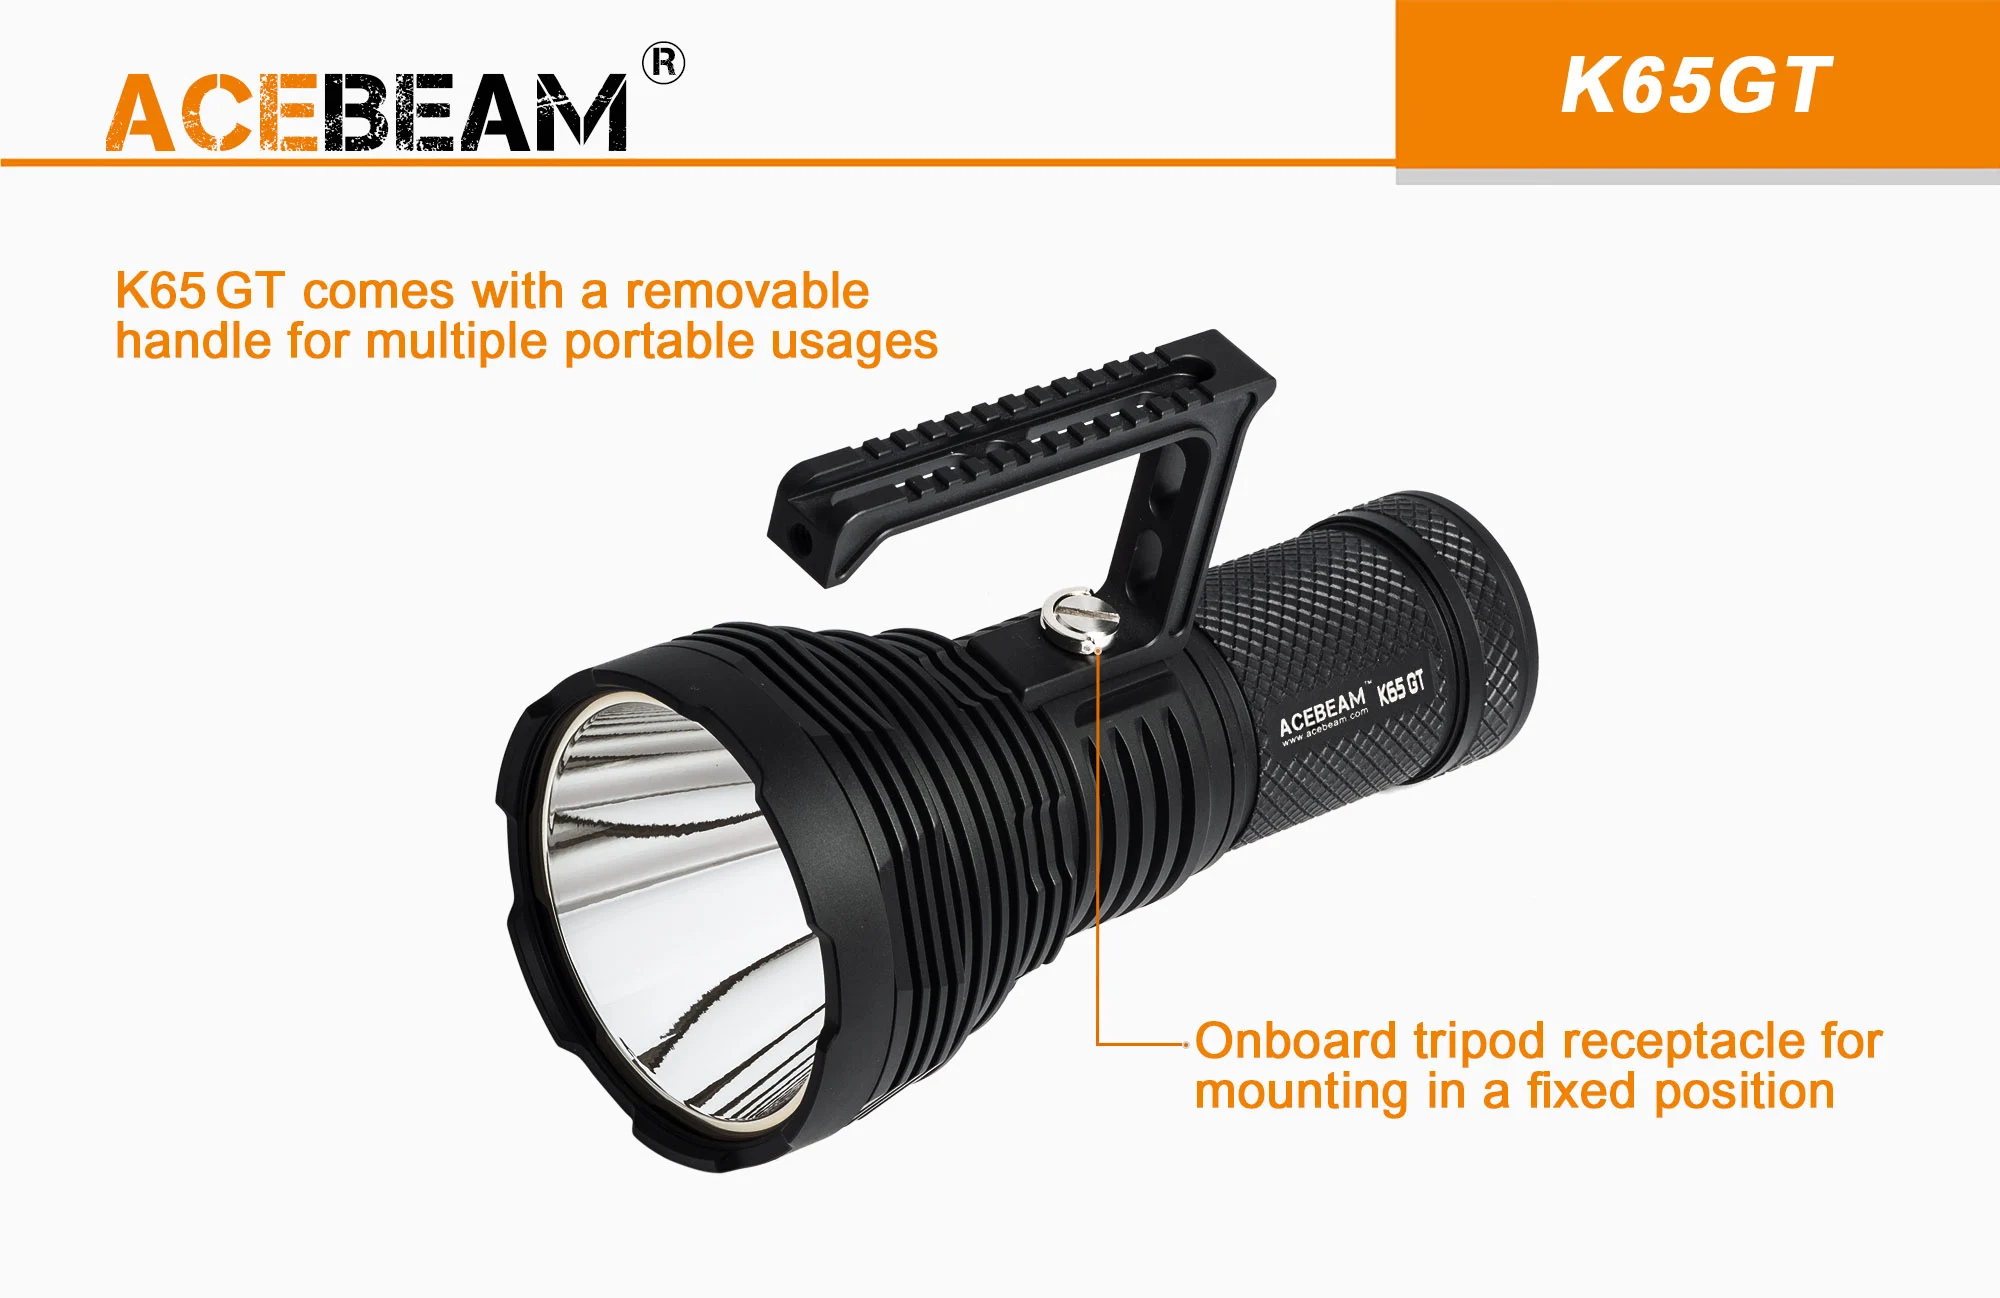 Acebaem K65GT 1 x LUMINUS SBT-90-GEN2 LED 6500 Lumens Professional Grade Searchlight